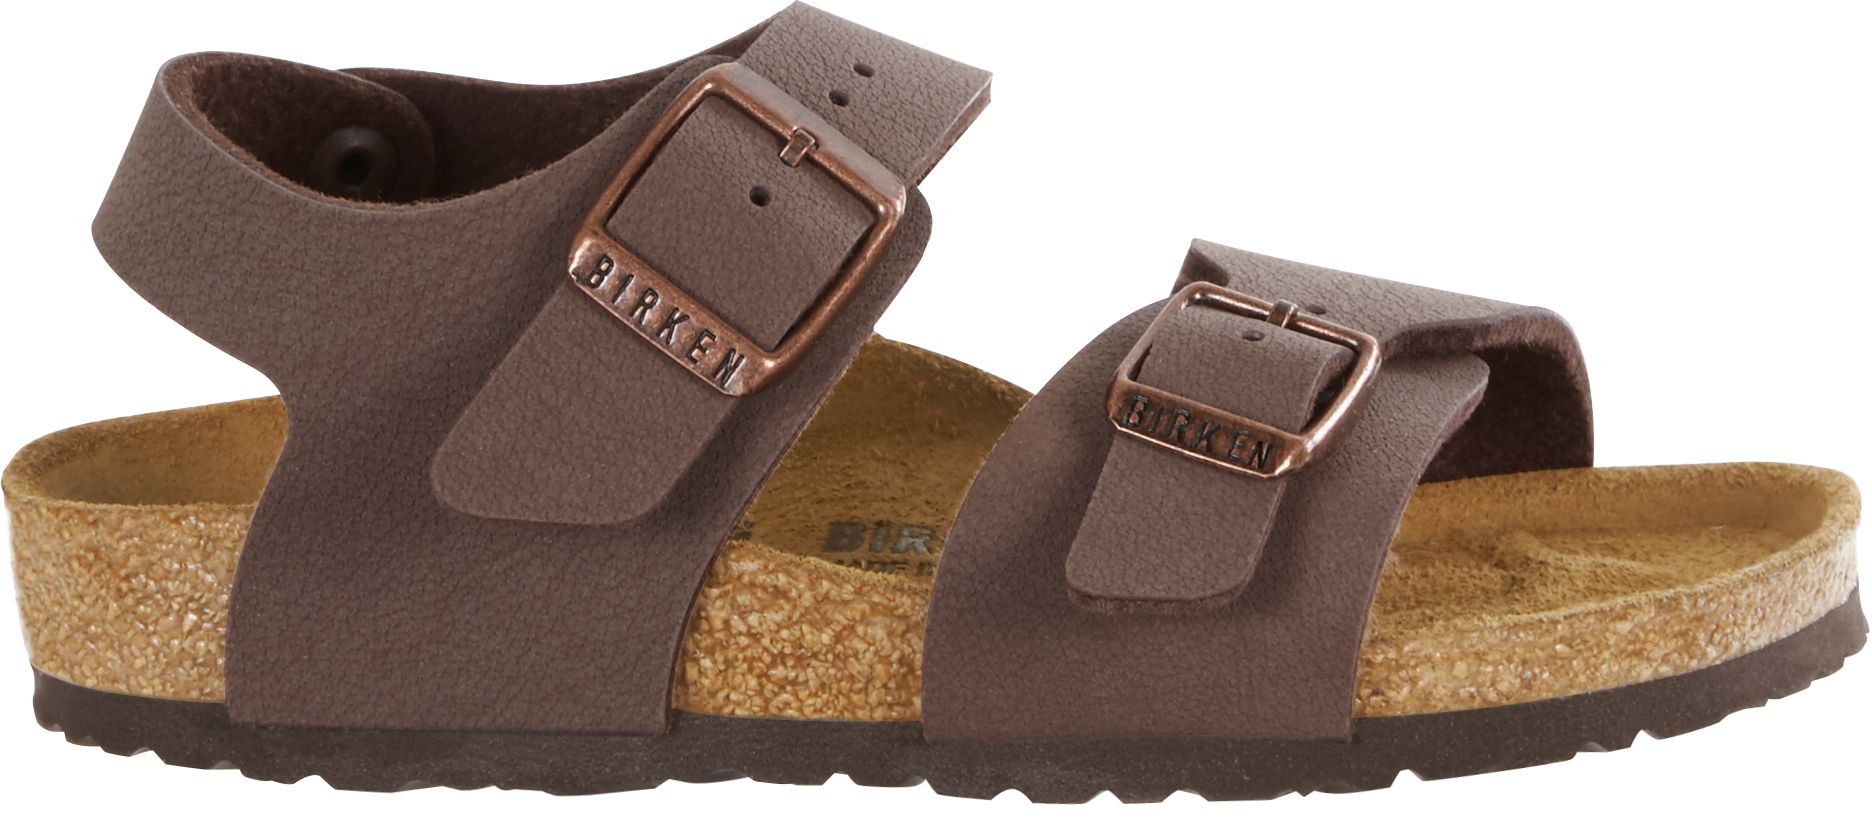 Detské hnedé Narrow sandále Birkenstock New York Birko-Flor Nubuck